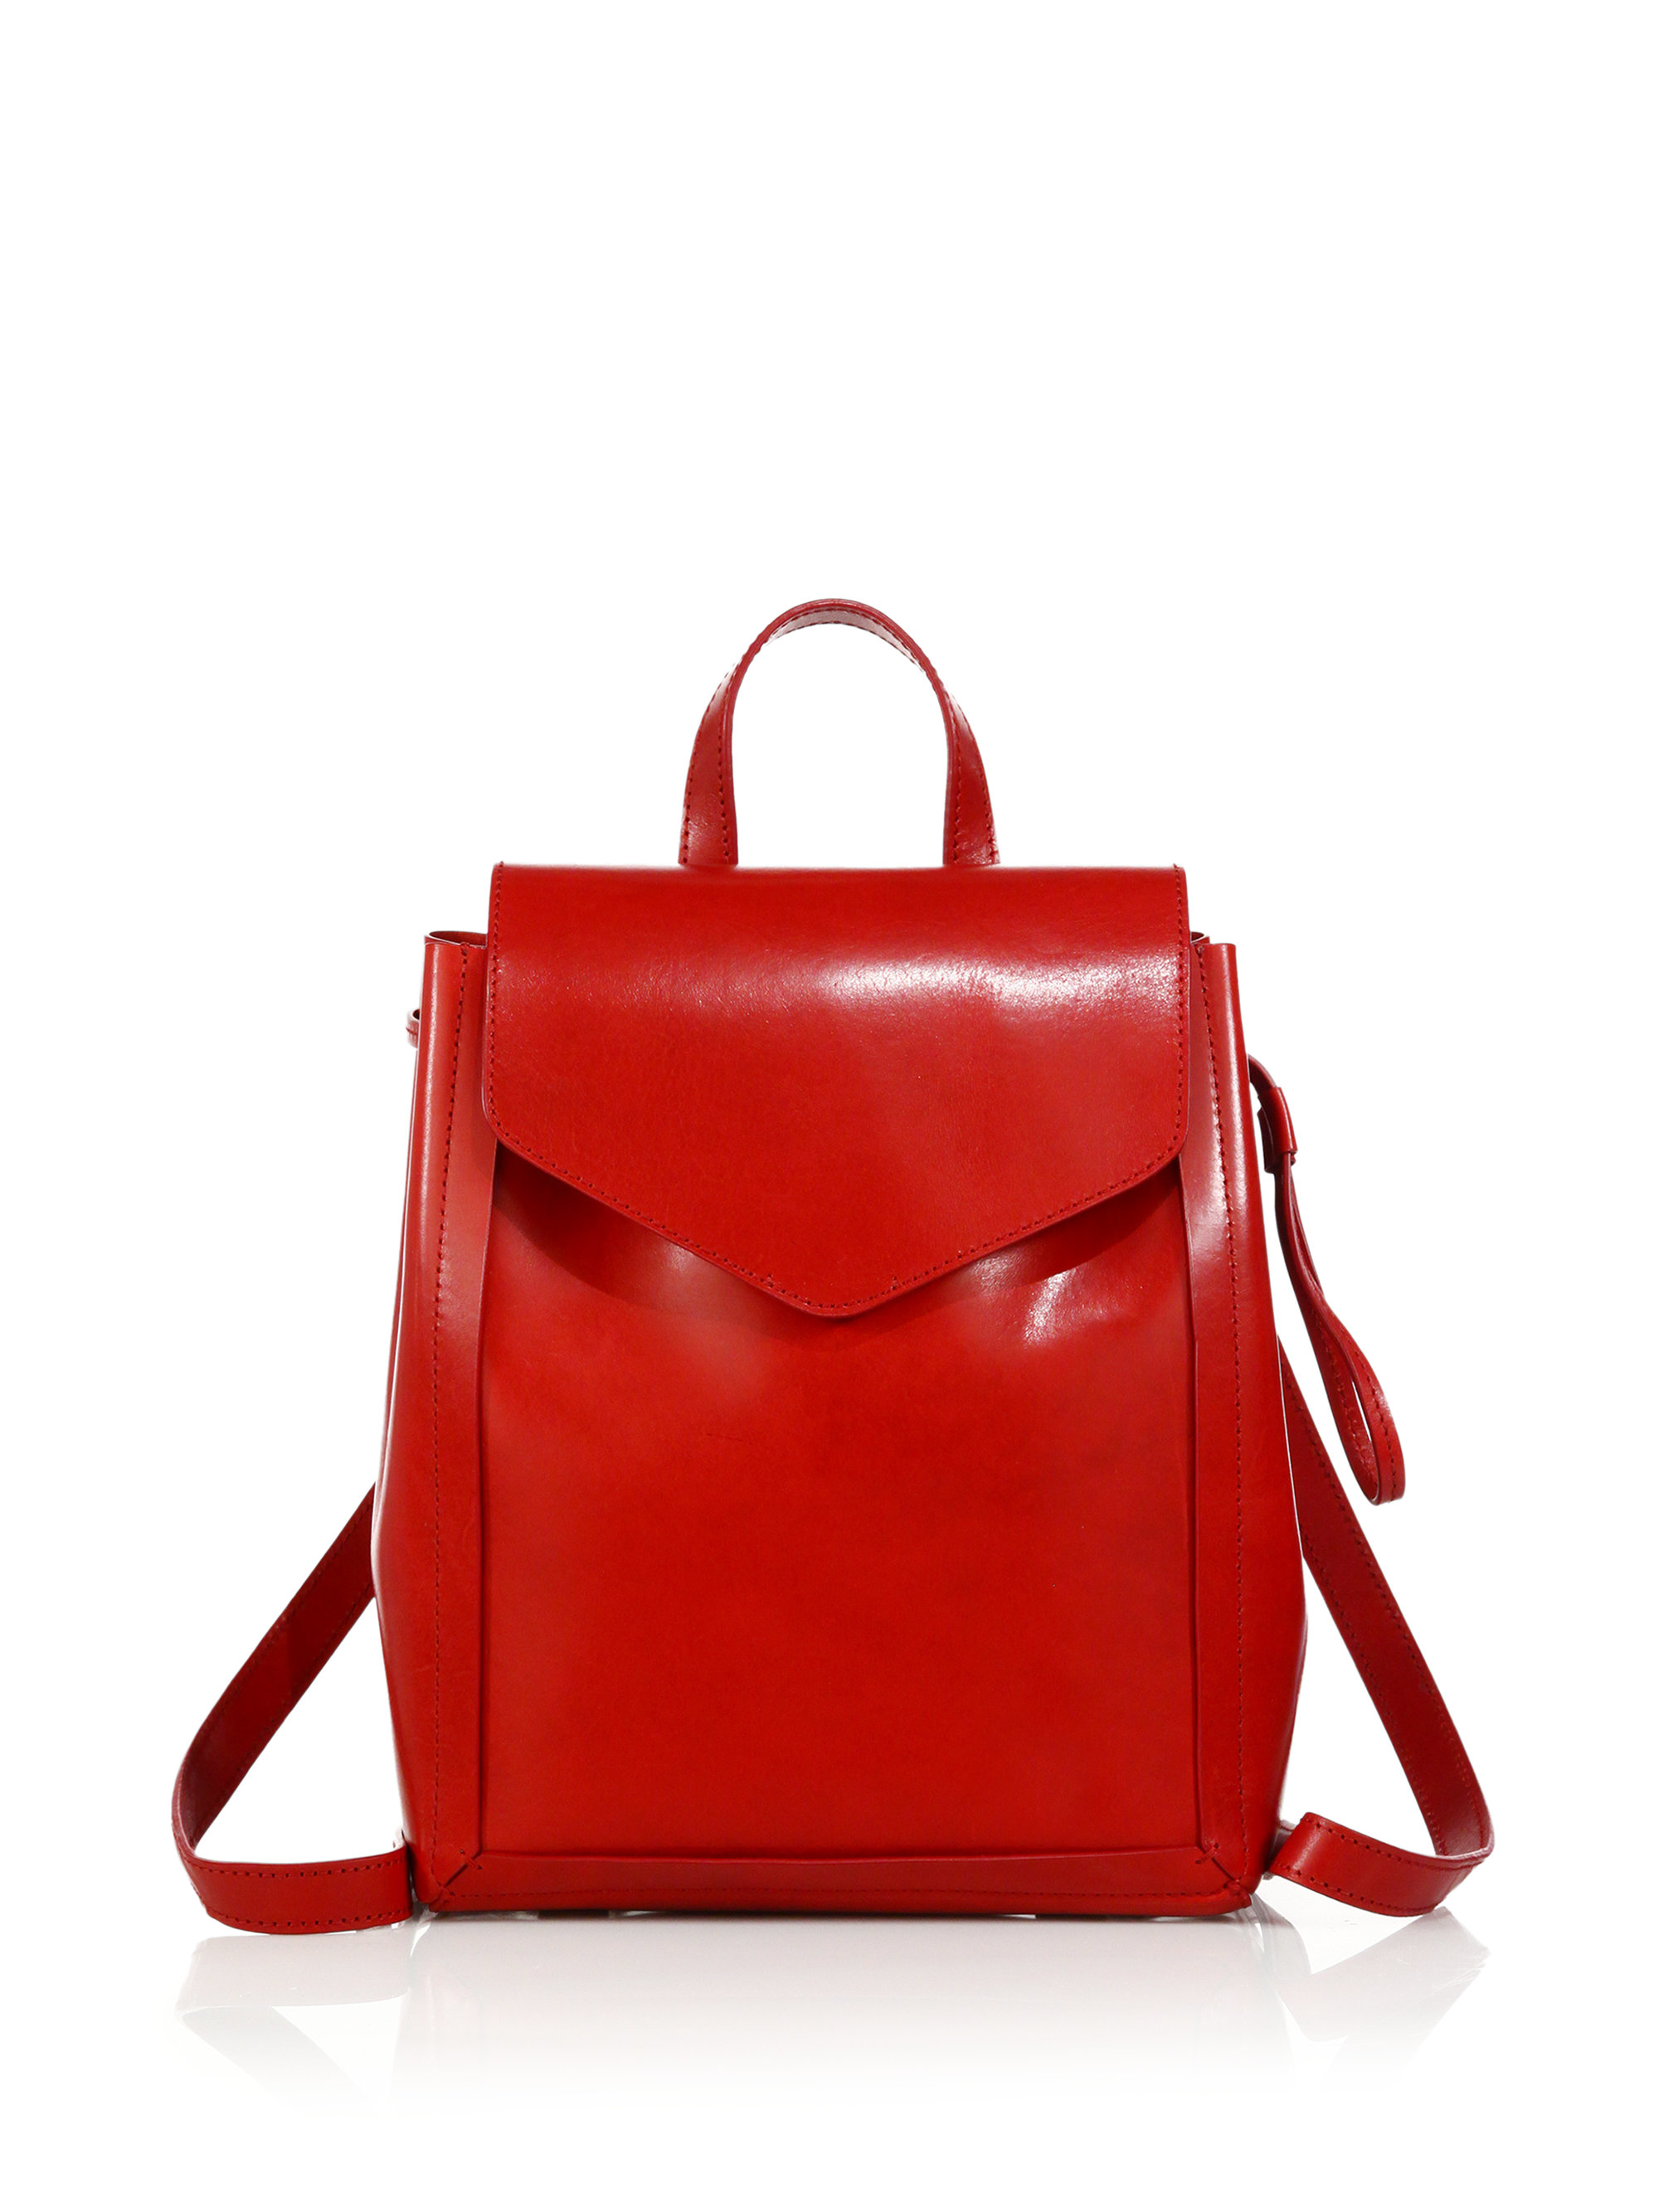 Lyst - Loeffler Randall Mini Leather Backpack in Red